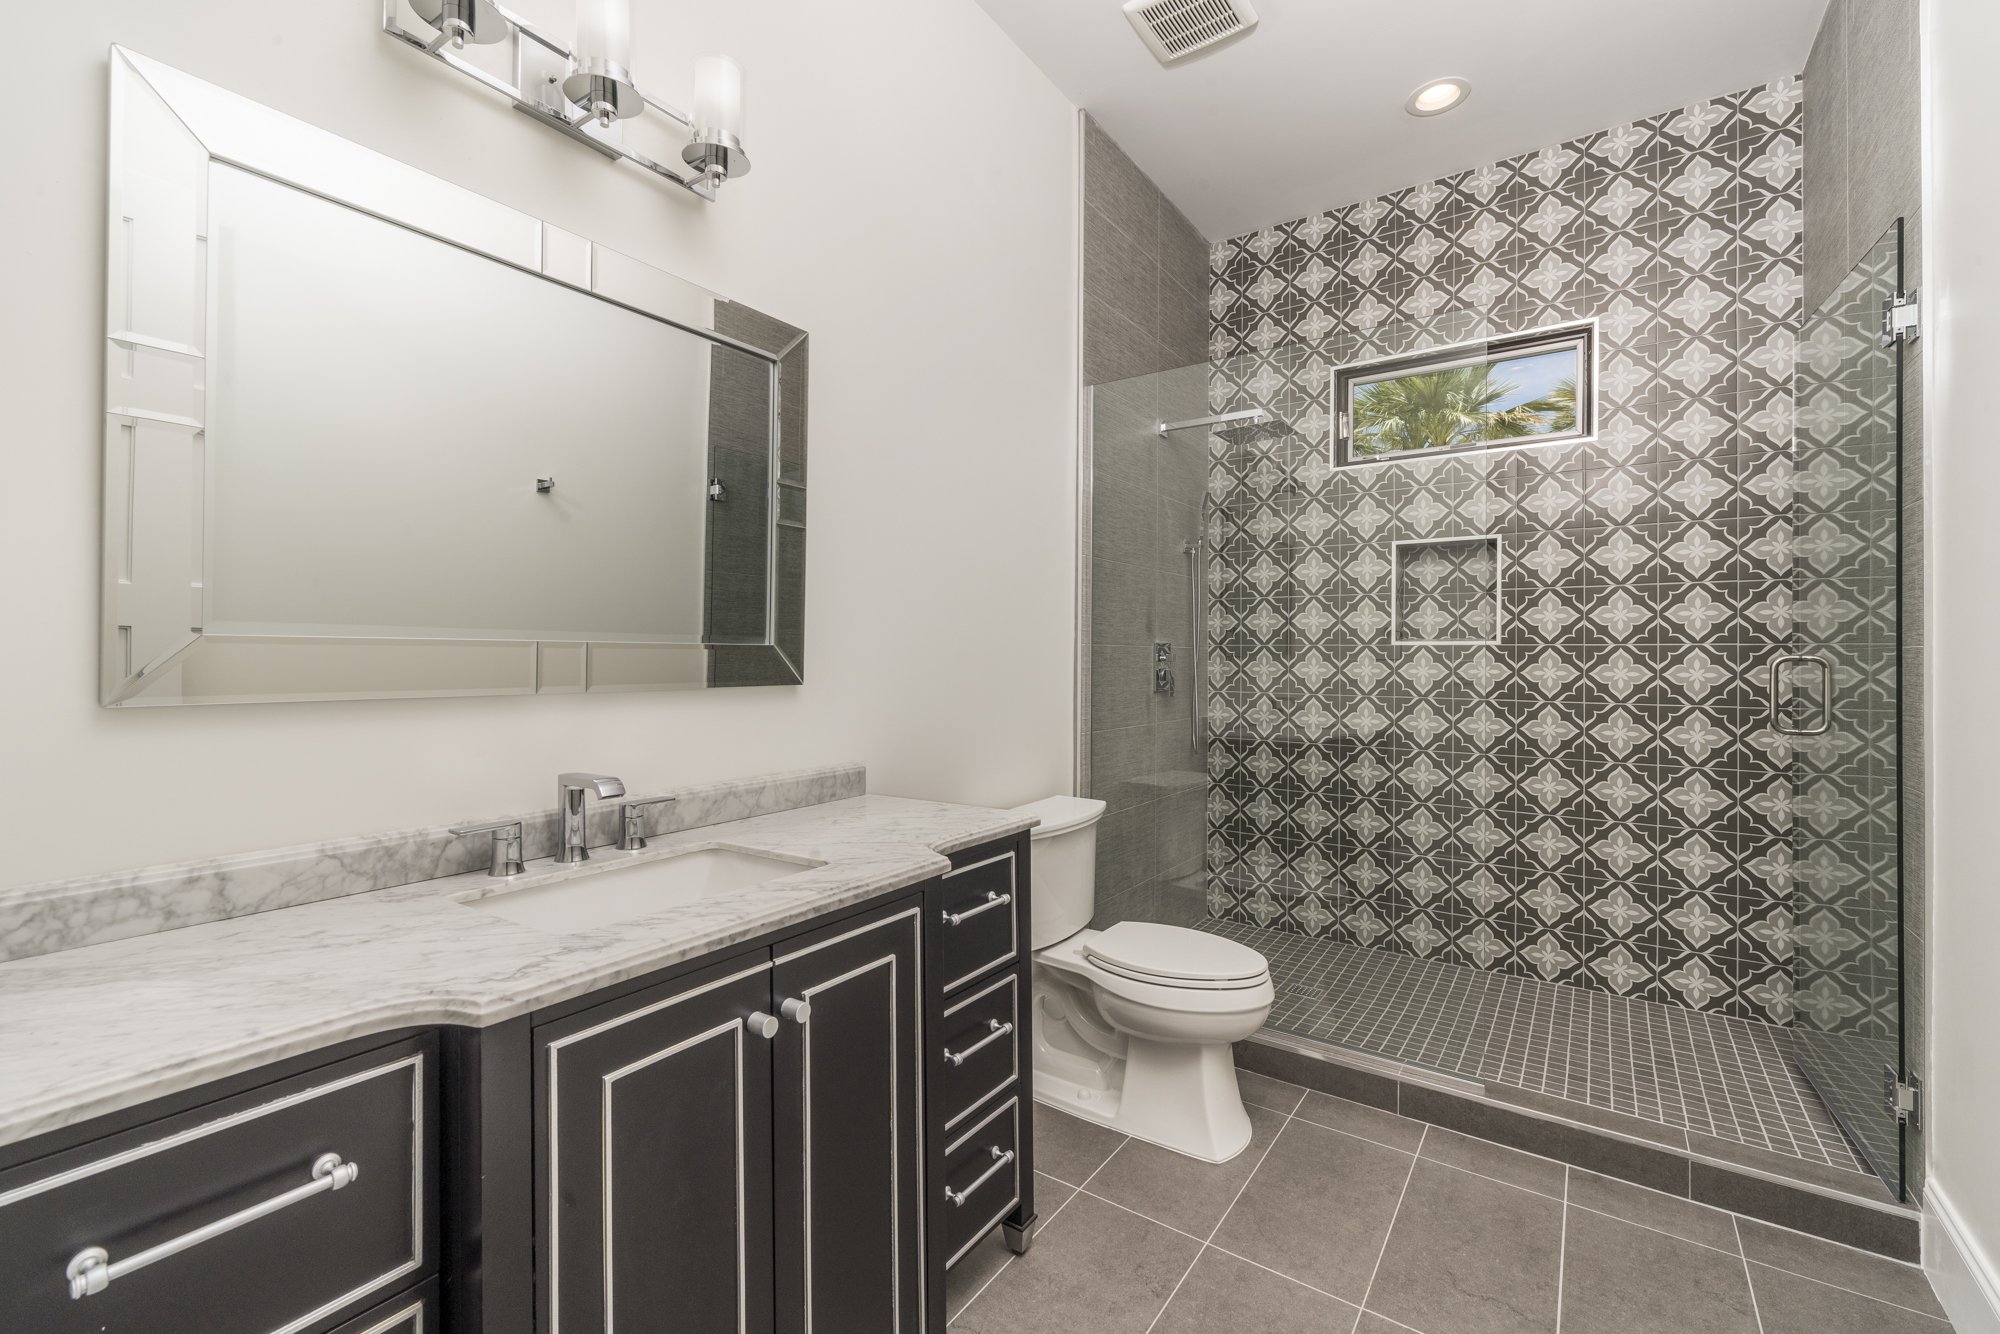 Home Remodeling & Bathroom Renovations in Scottsdale AZ